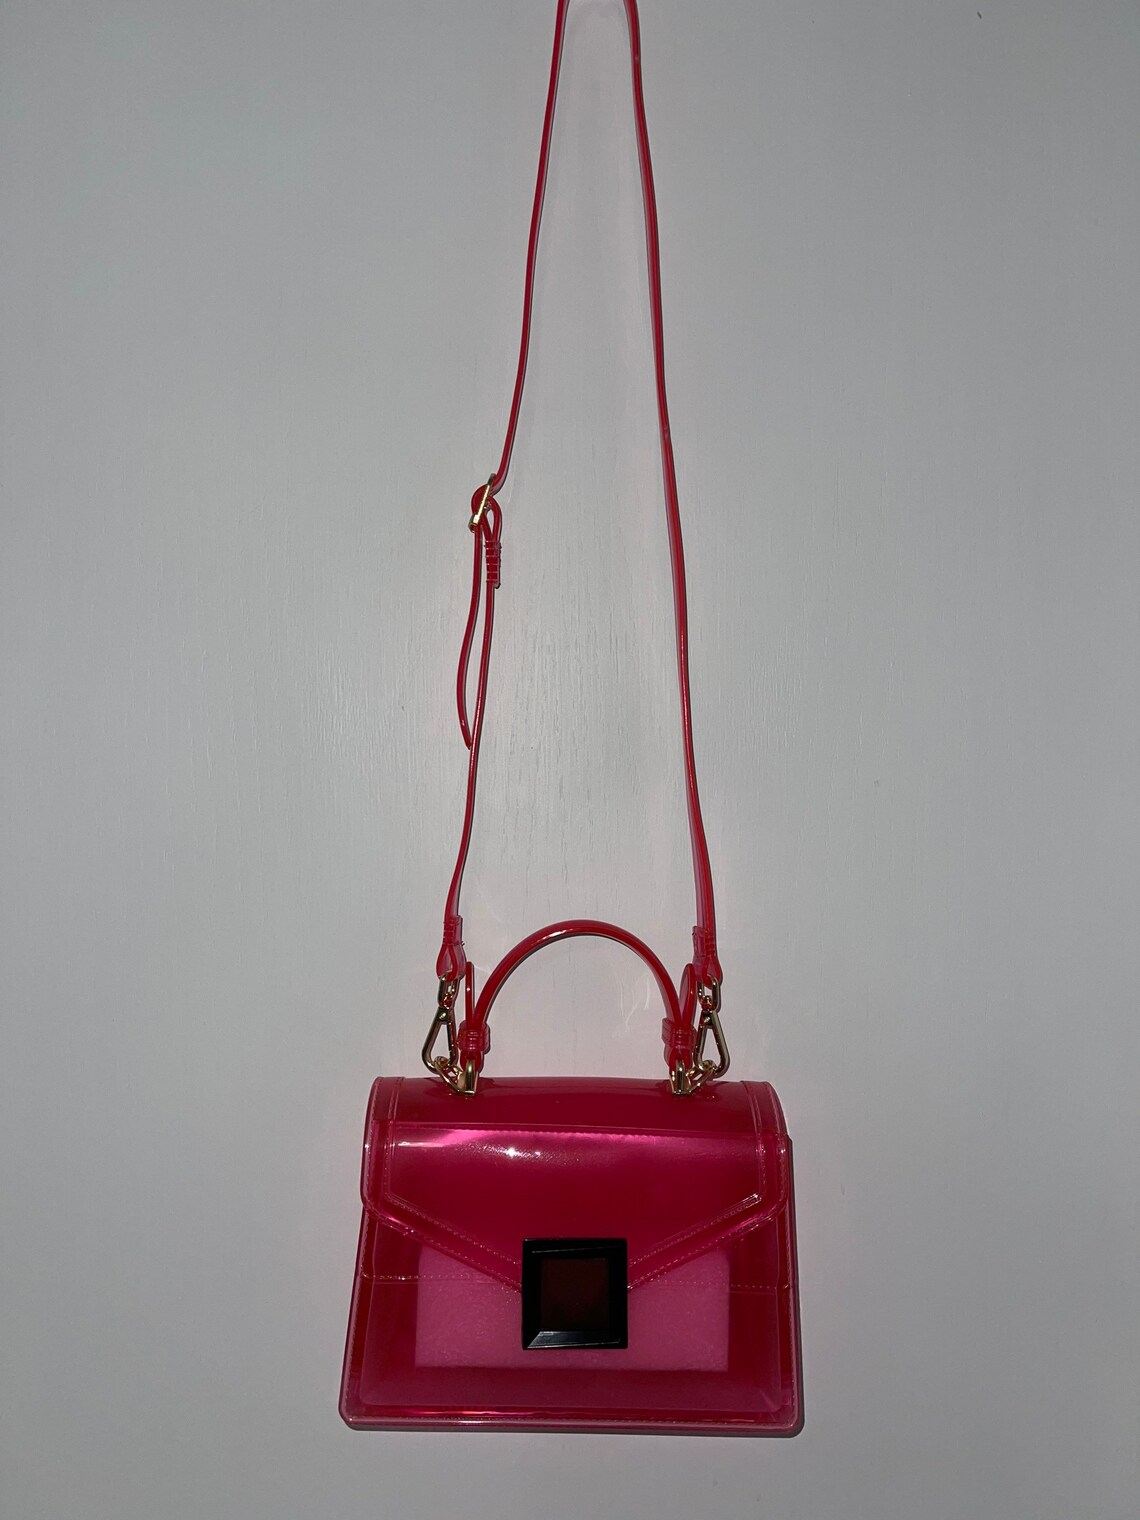 Pink jelly purse | Etsy